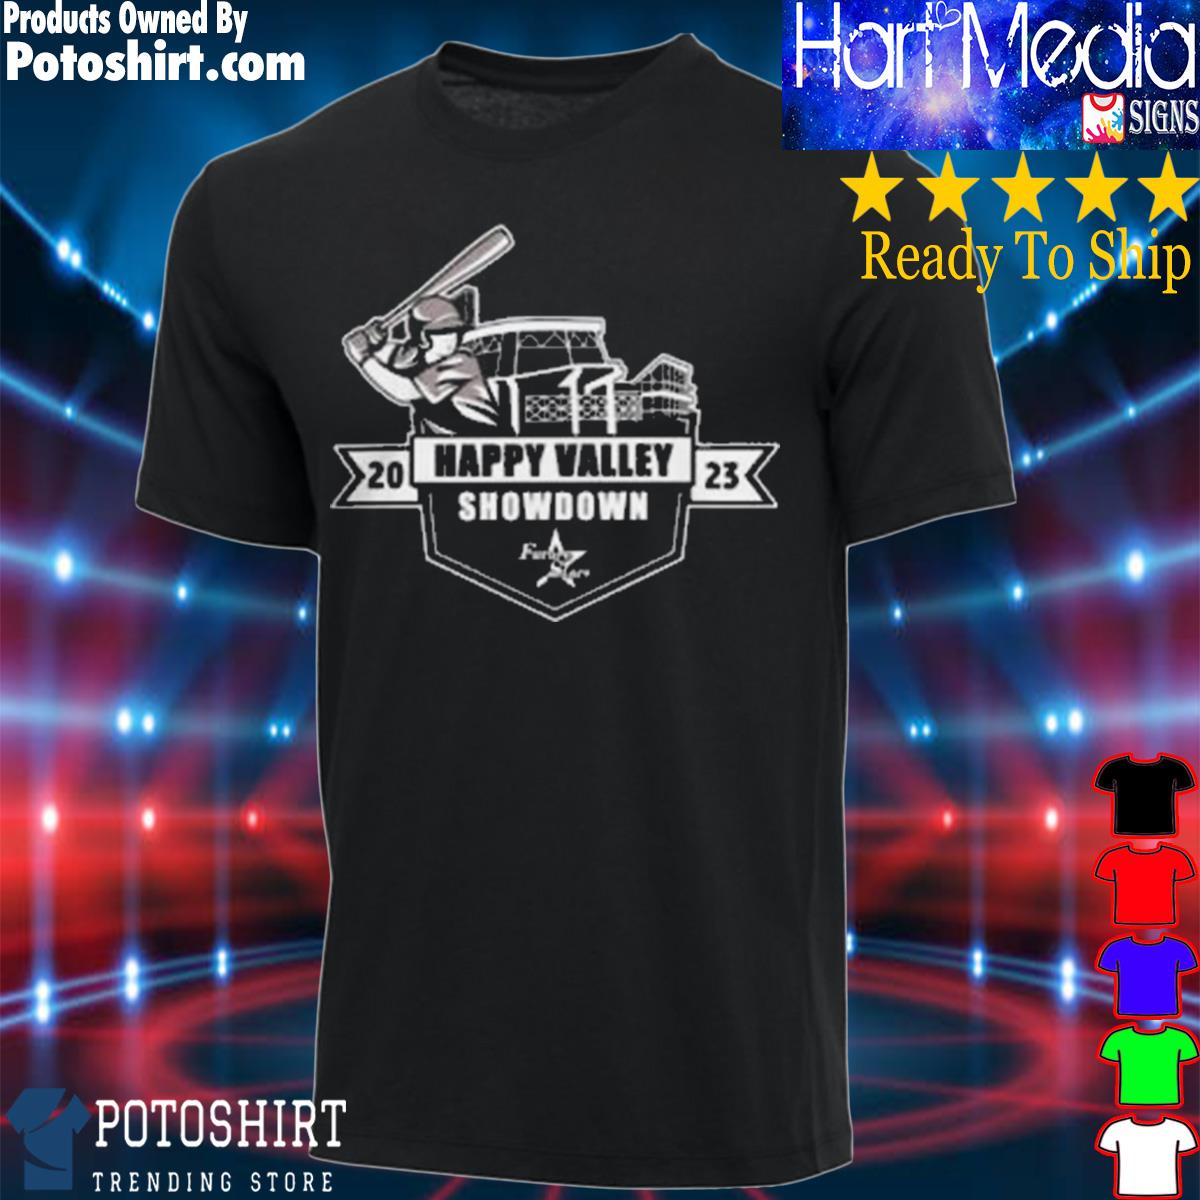 Official Philadelphia Phillies National League Champions 2022 Shirt -  Teespix - Store Fashion LLC